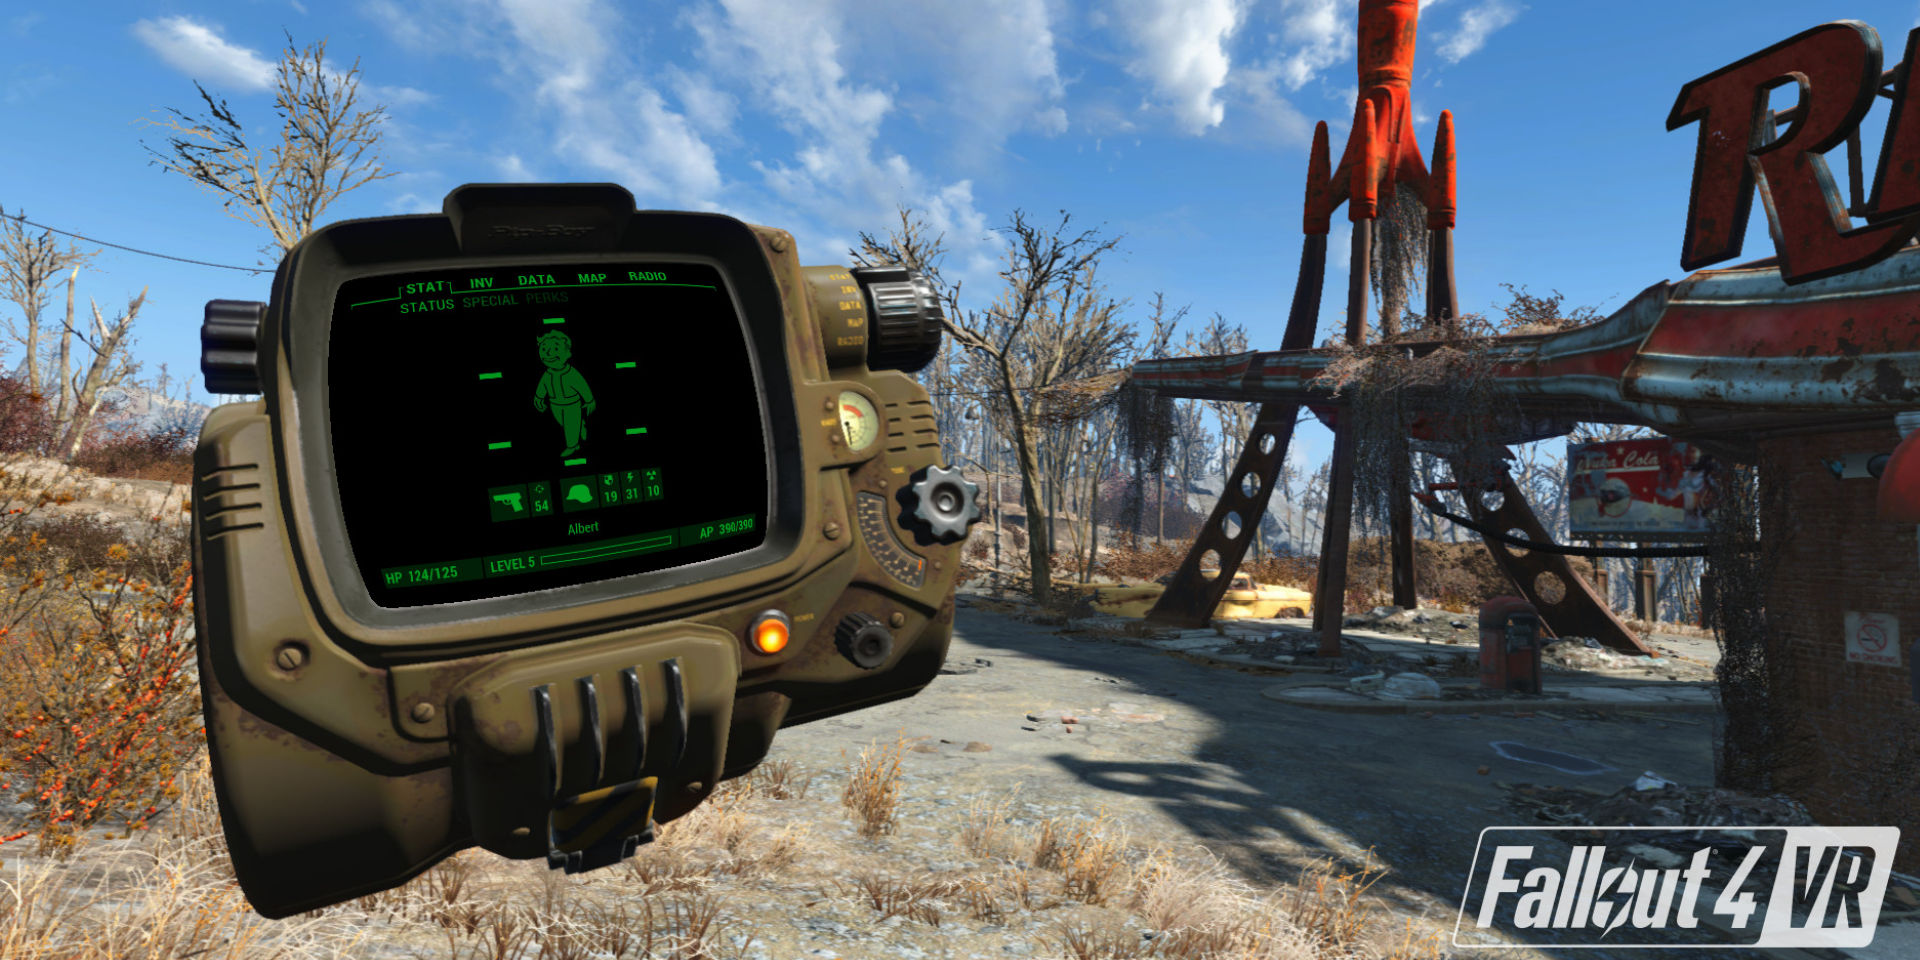 L’ora è giunta per Fallout 4 VR